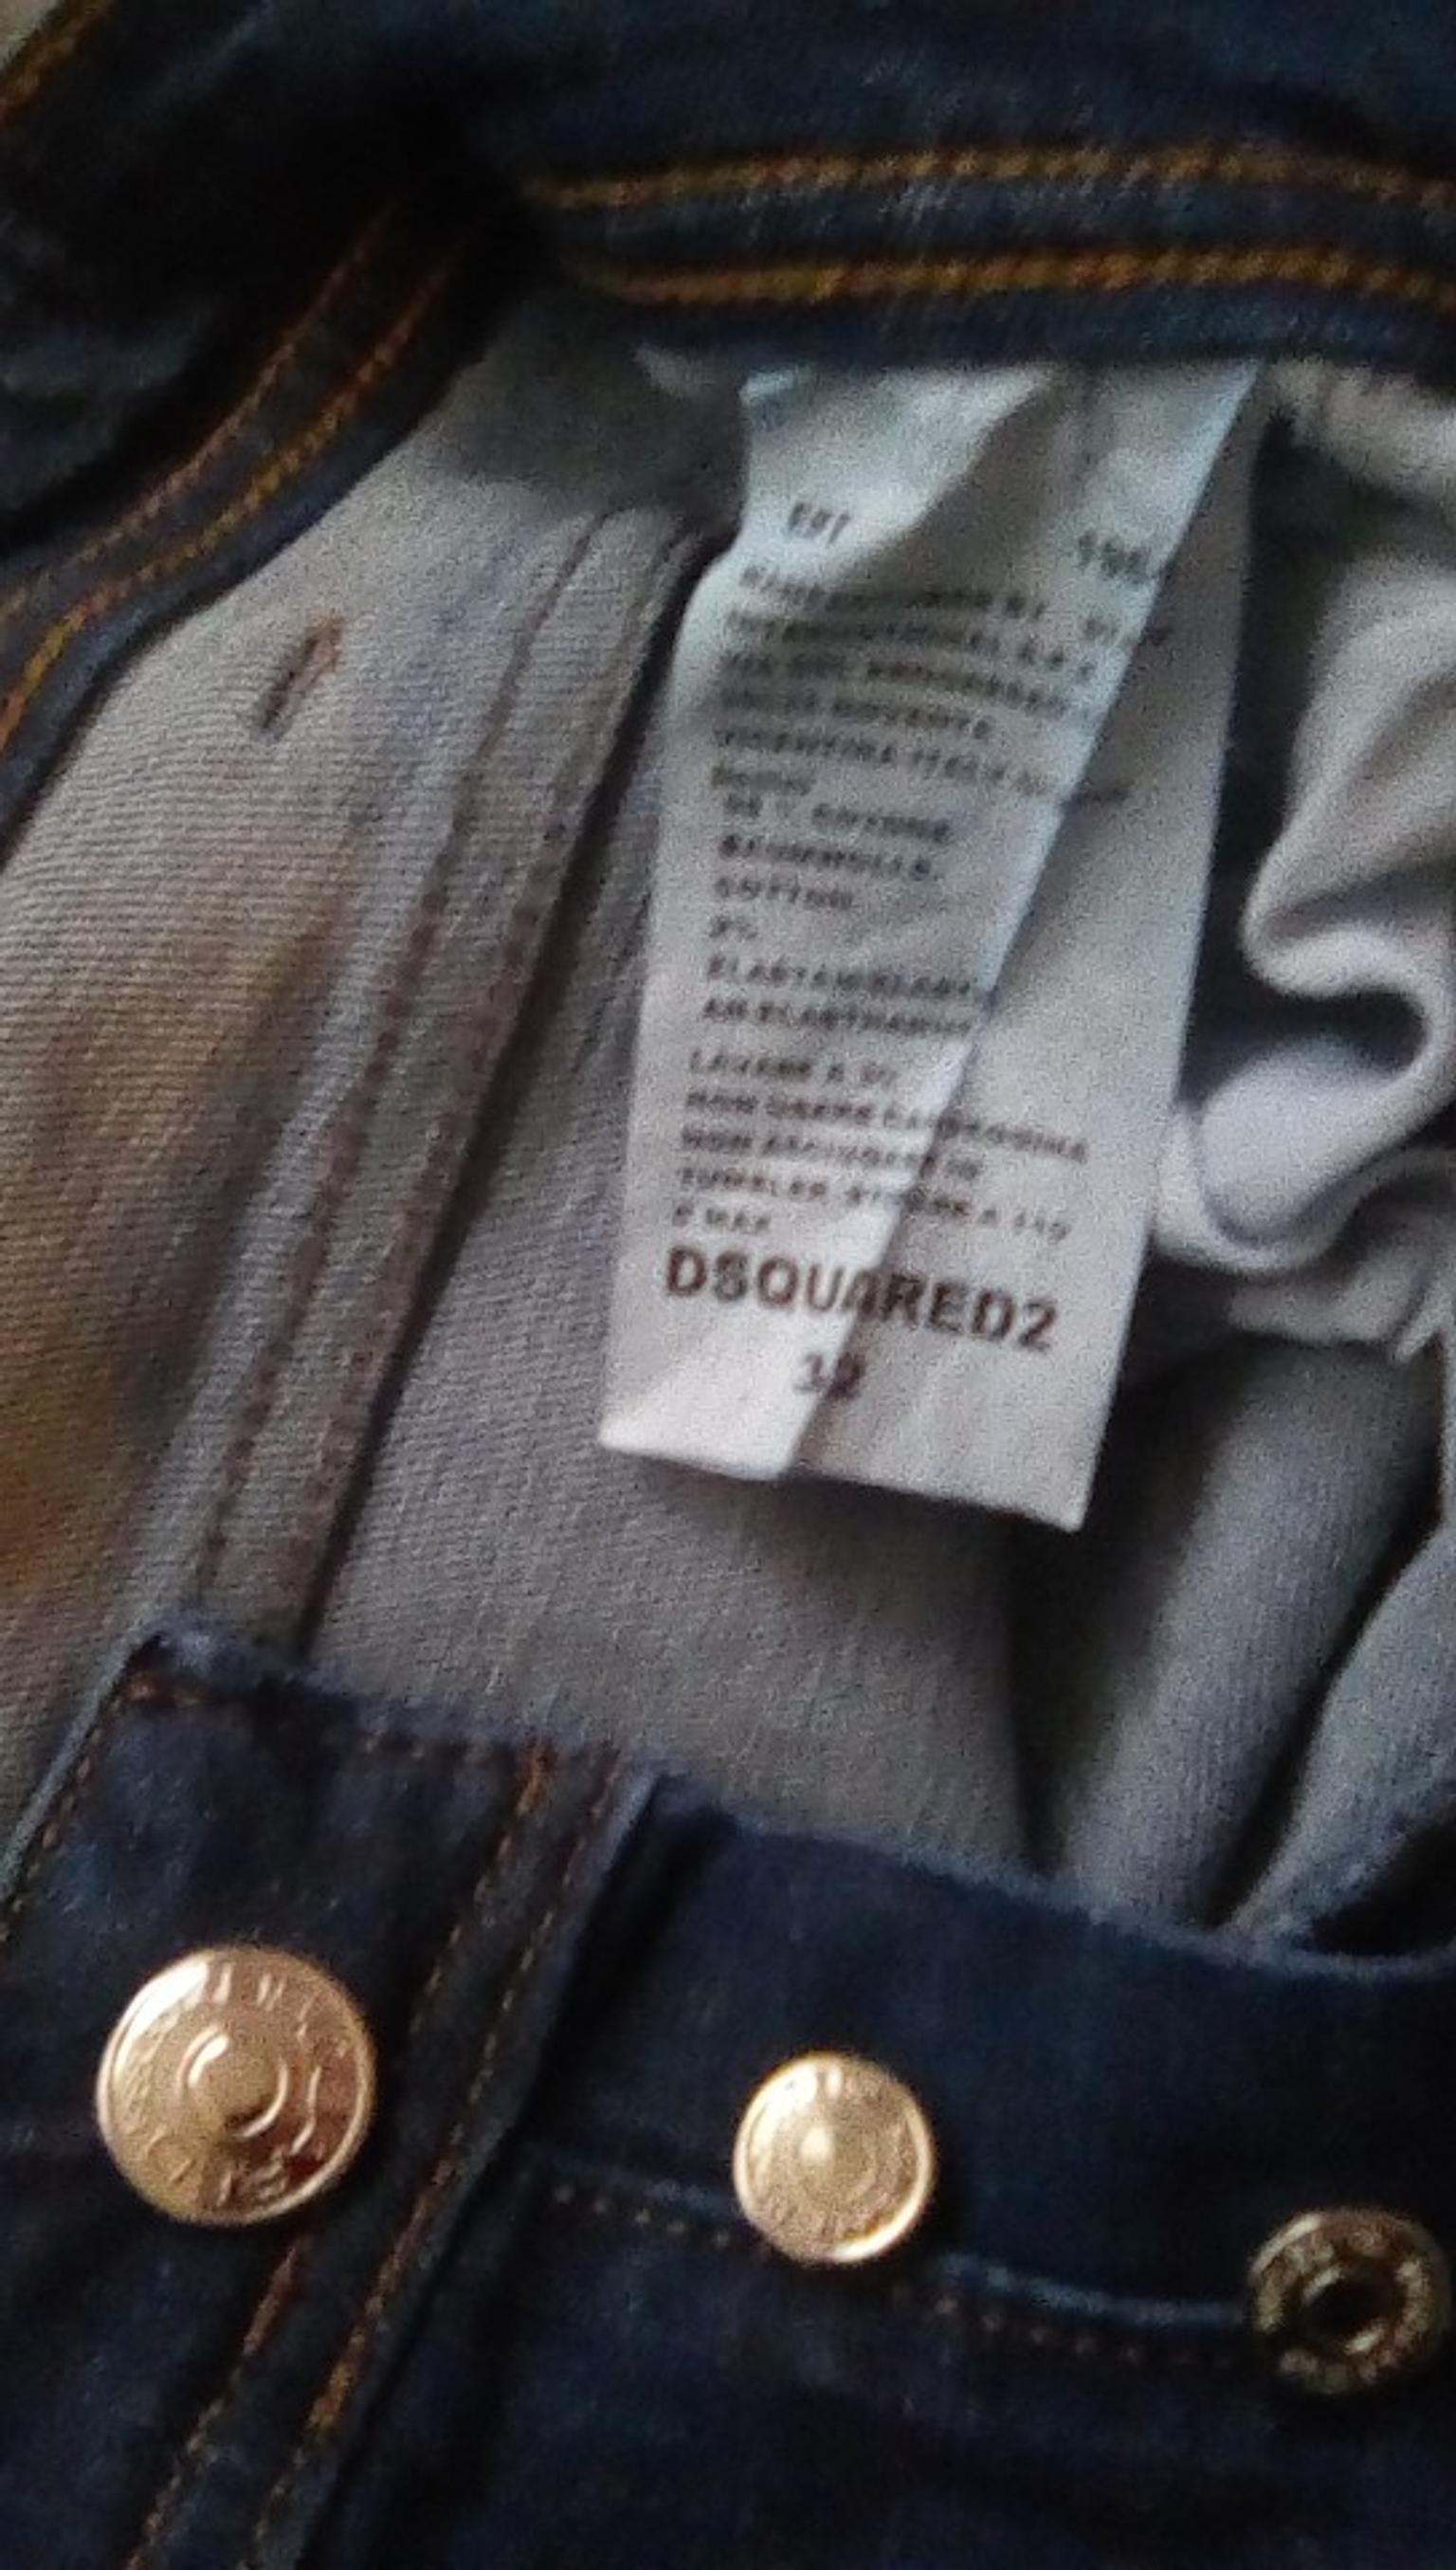 dsquared2 jeans original